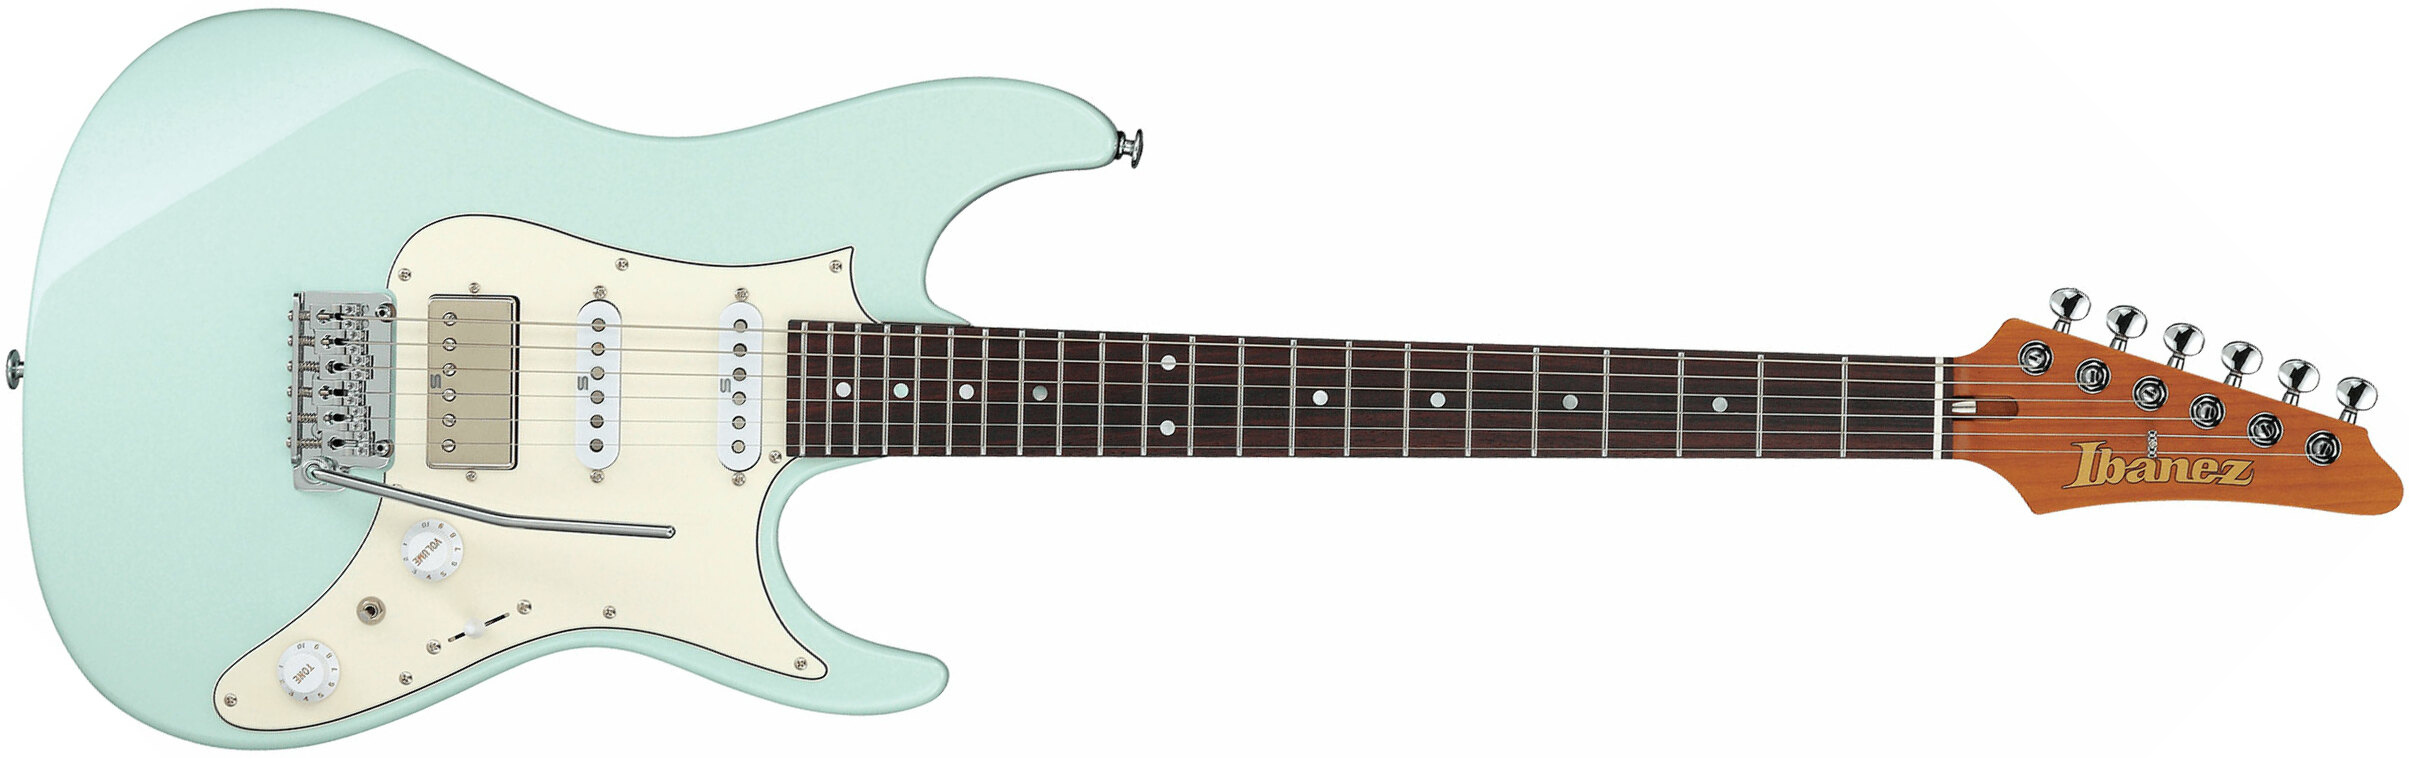 Ibanez Az2204nw Mgr Prestige Jap Hss Seymour Duncan Trem Rw - Mint Green - Str shape electric guitar - Main picture